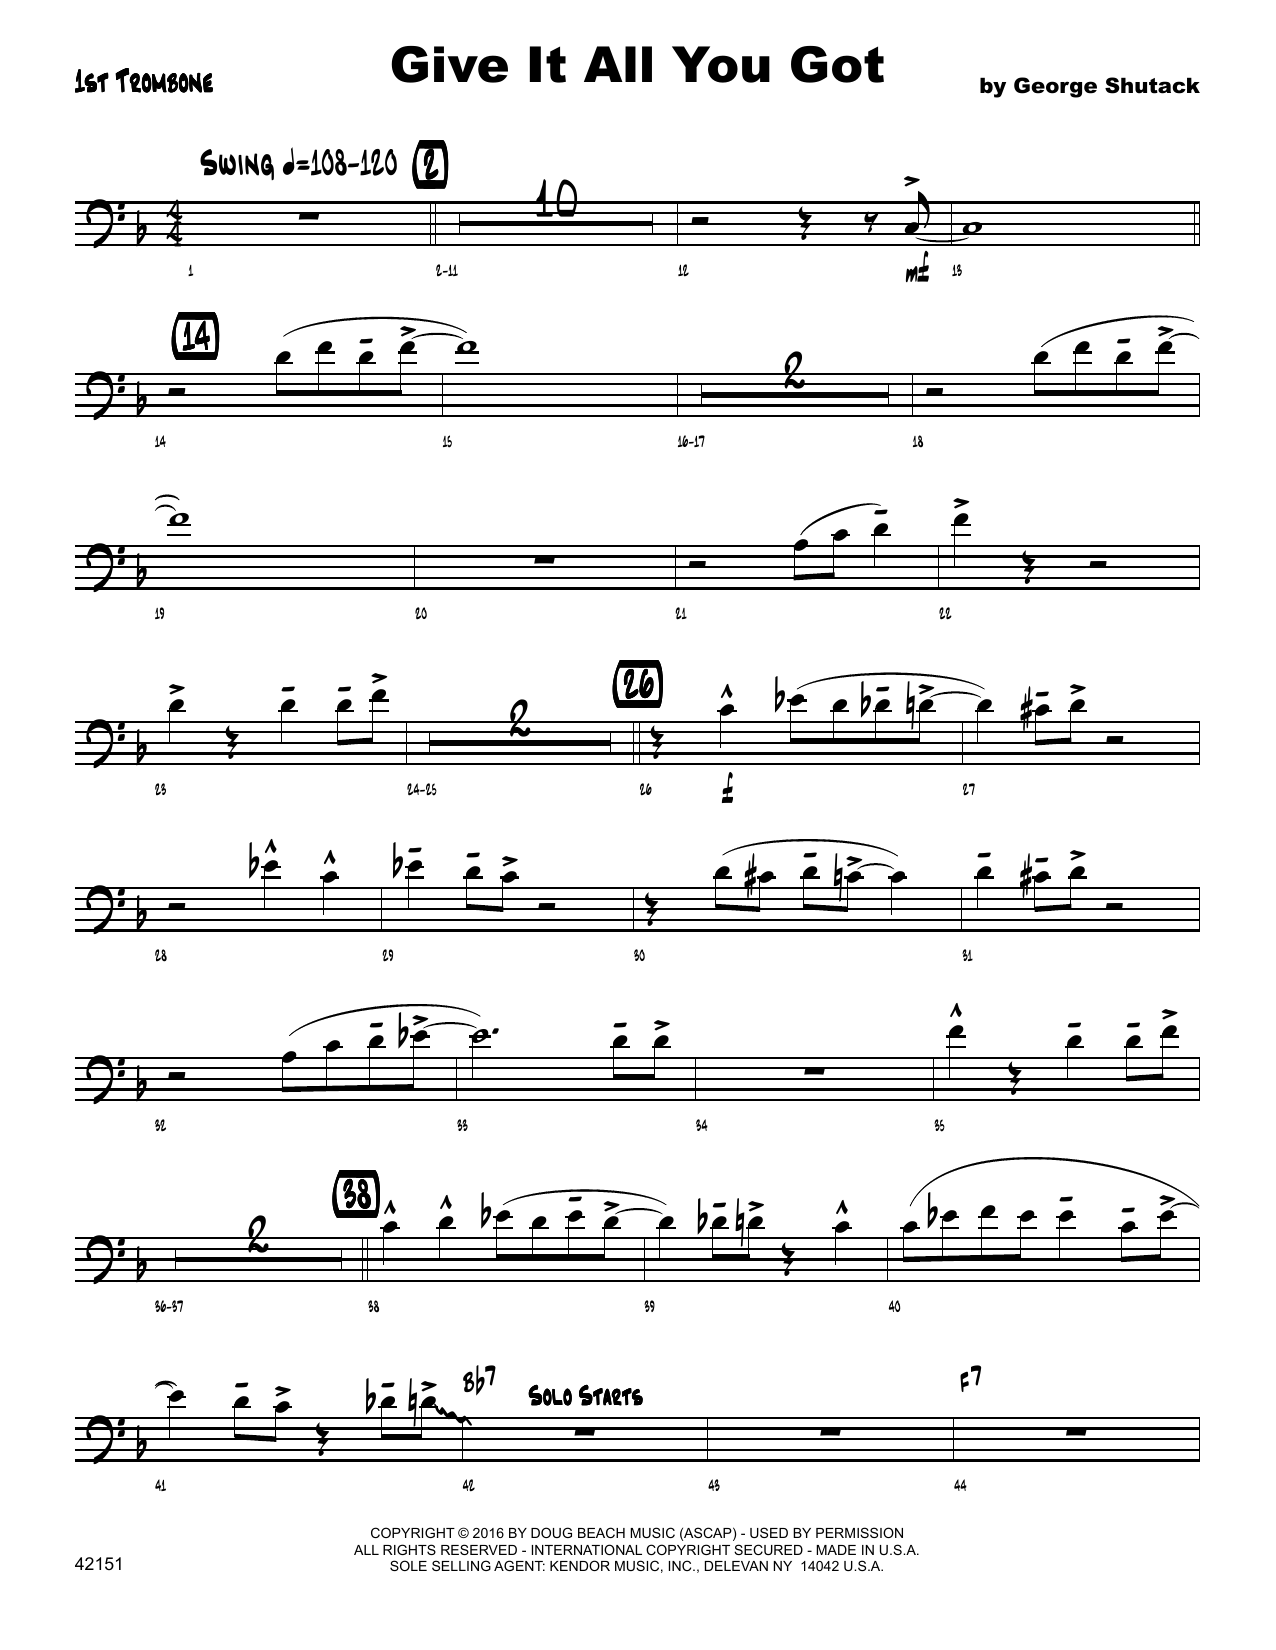 Download George Shutack Give It All You Got - 1st Trombone Sheet Music